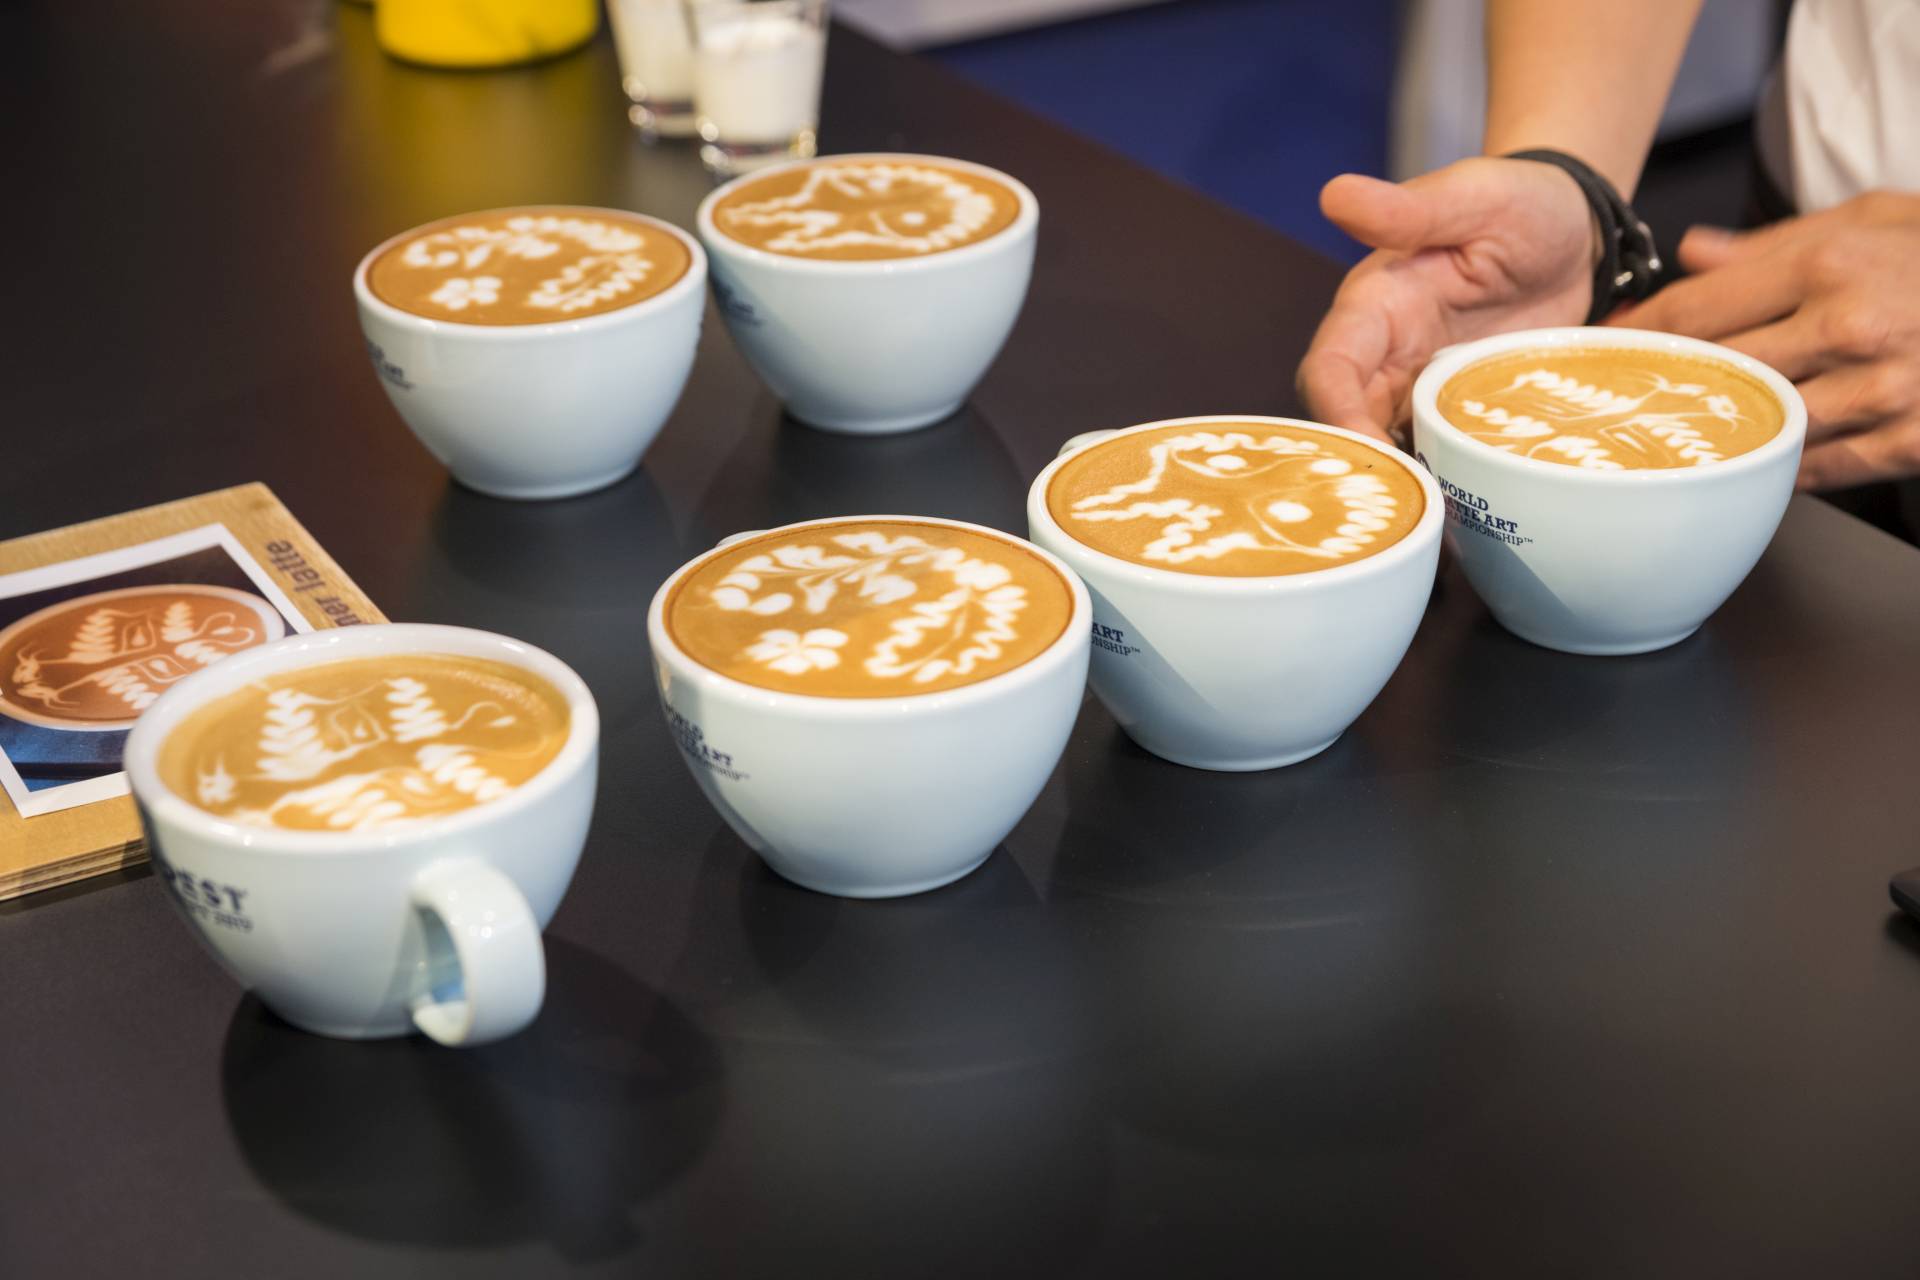 world of coffee latte art 2017